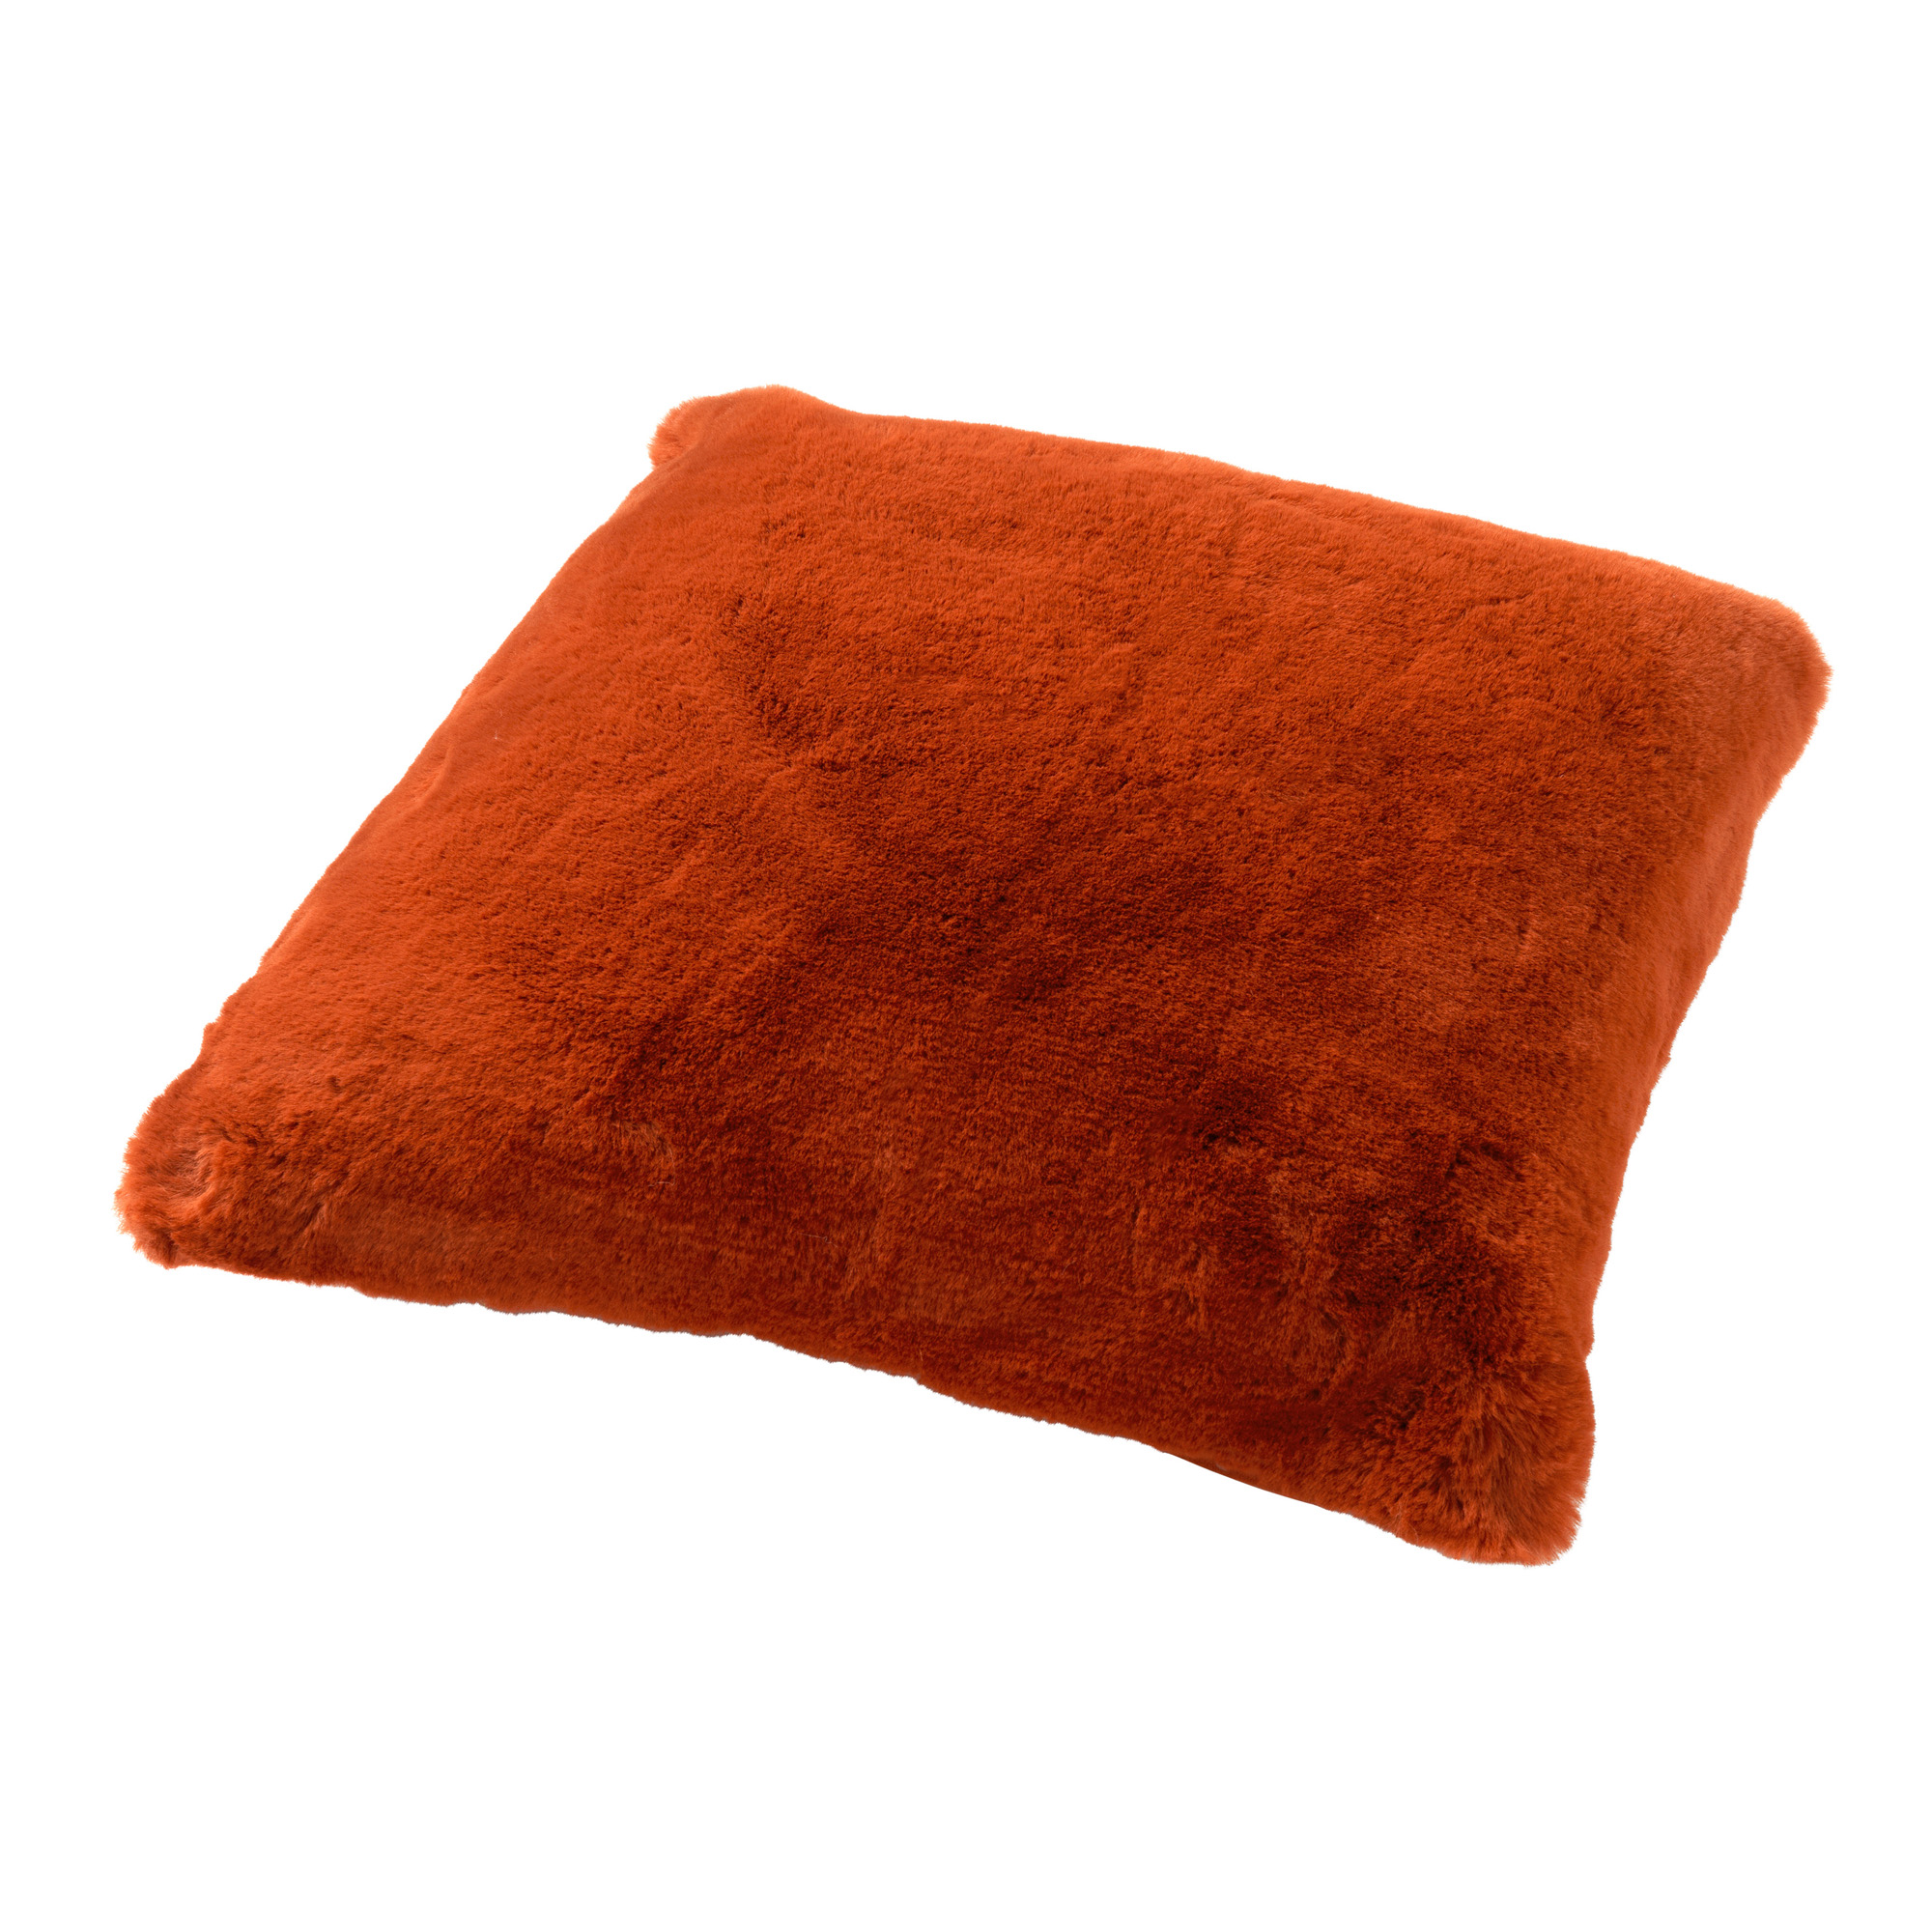 ZAYA - Sierkussen 45x45 cm - bontlook - effen kleur - Potters Clay - oranje